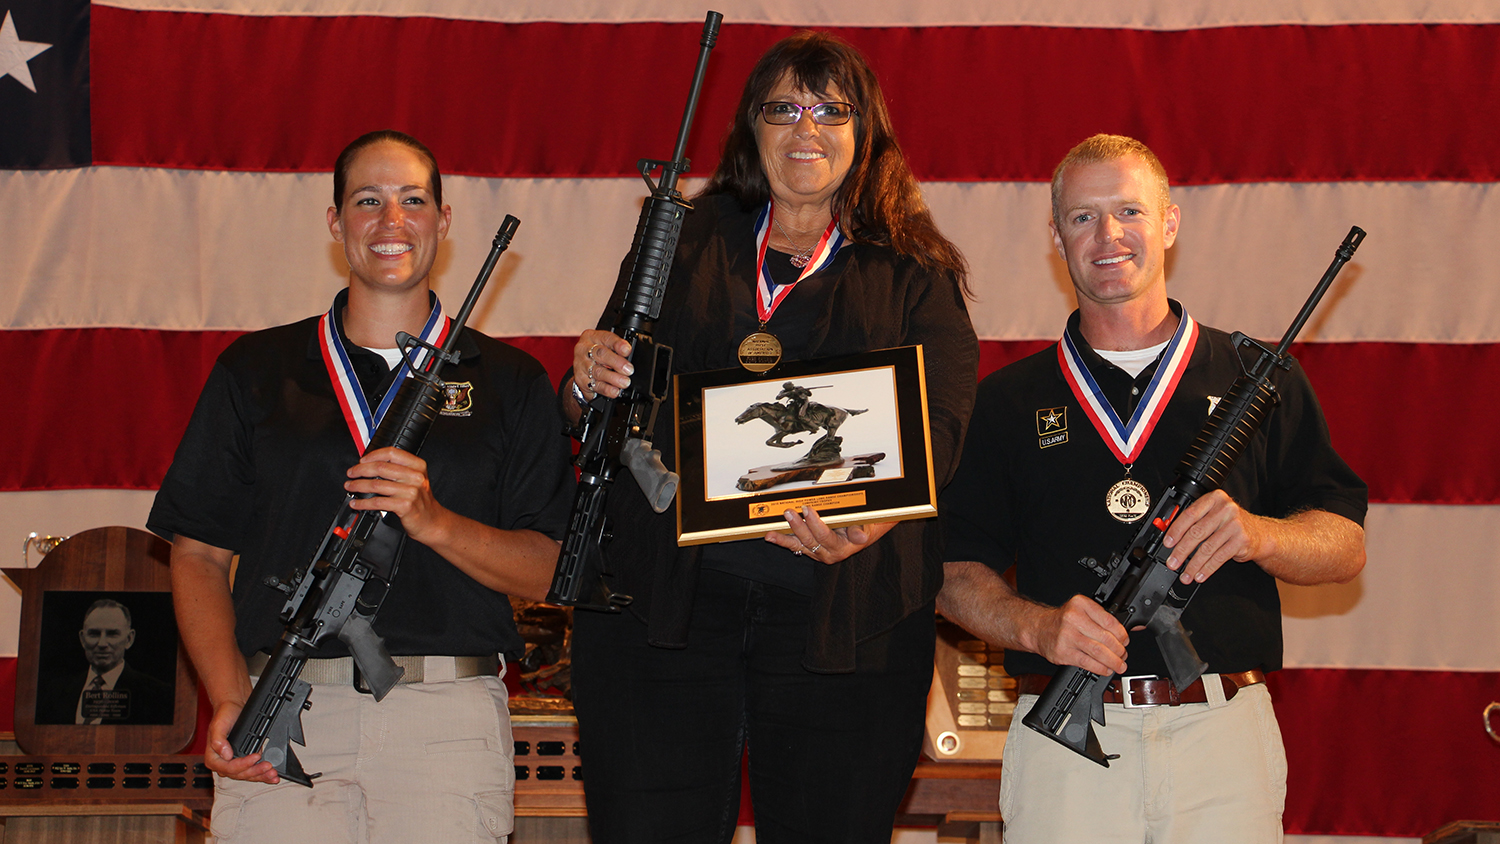 Nancy Tompkins Wins 2015 NRA National Long Range Championship